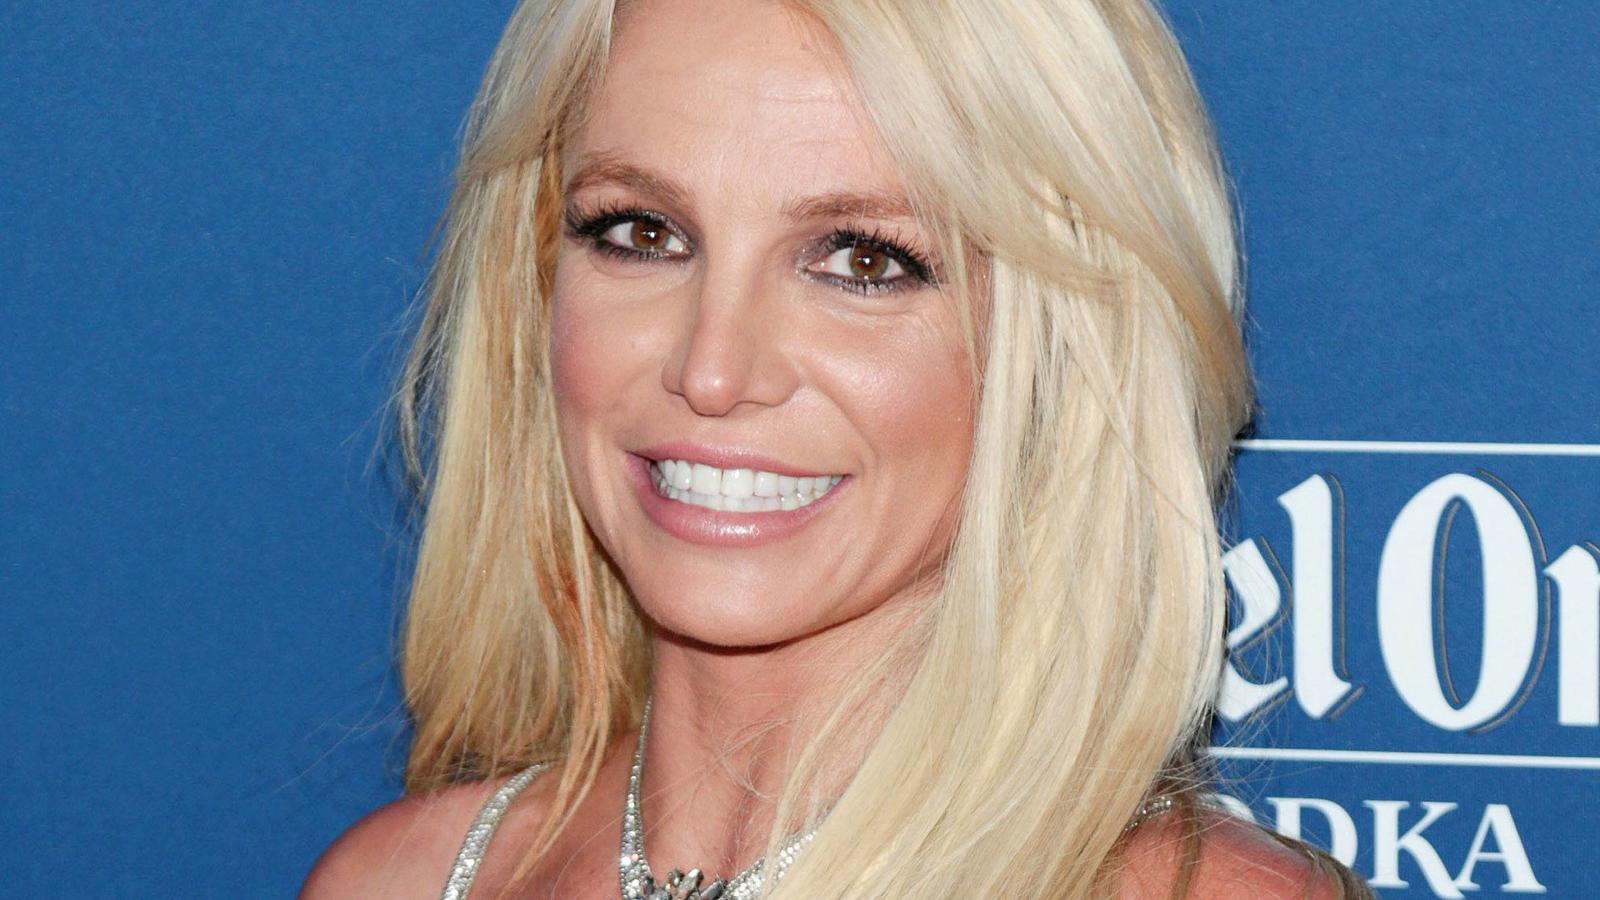  Sängerin Britney Spears